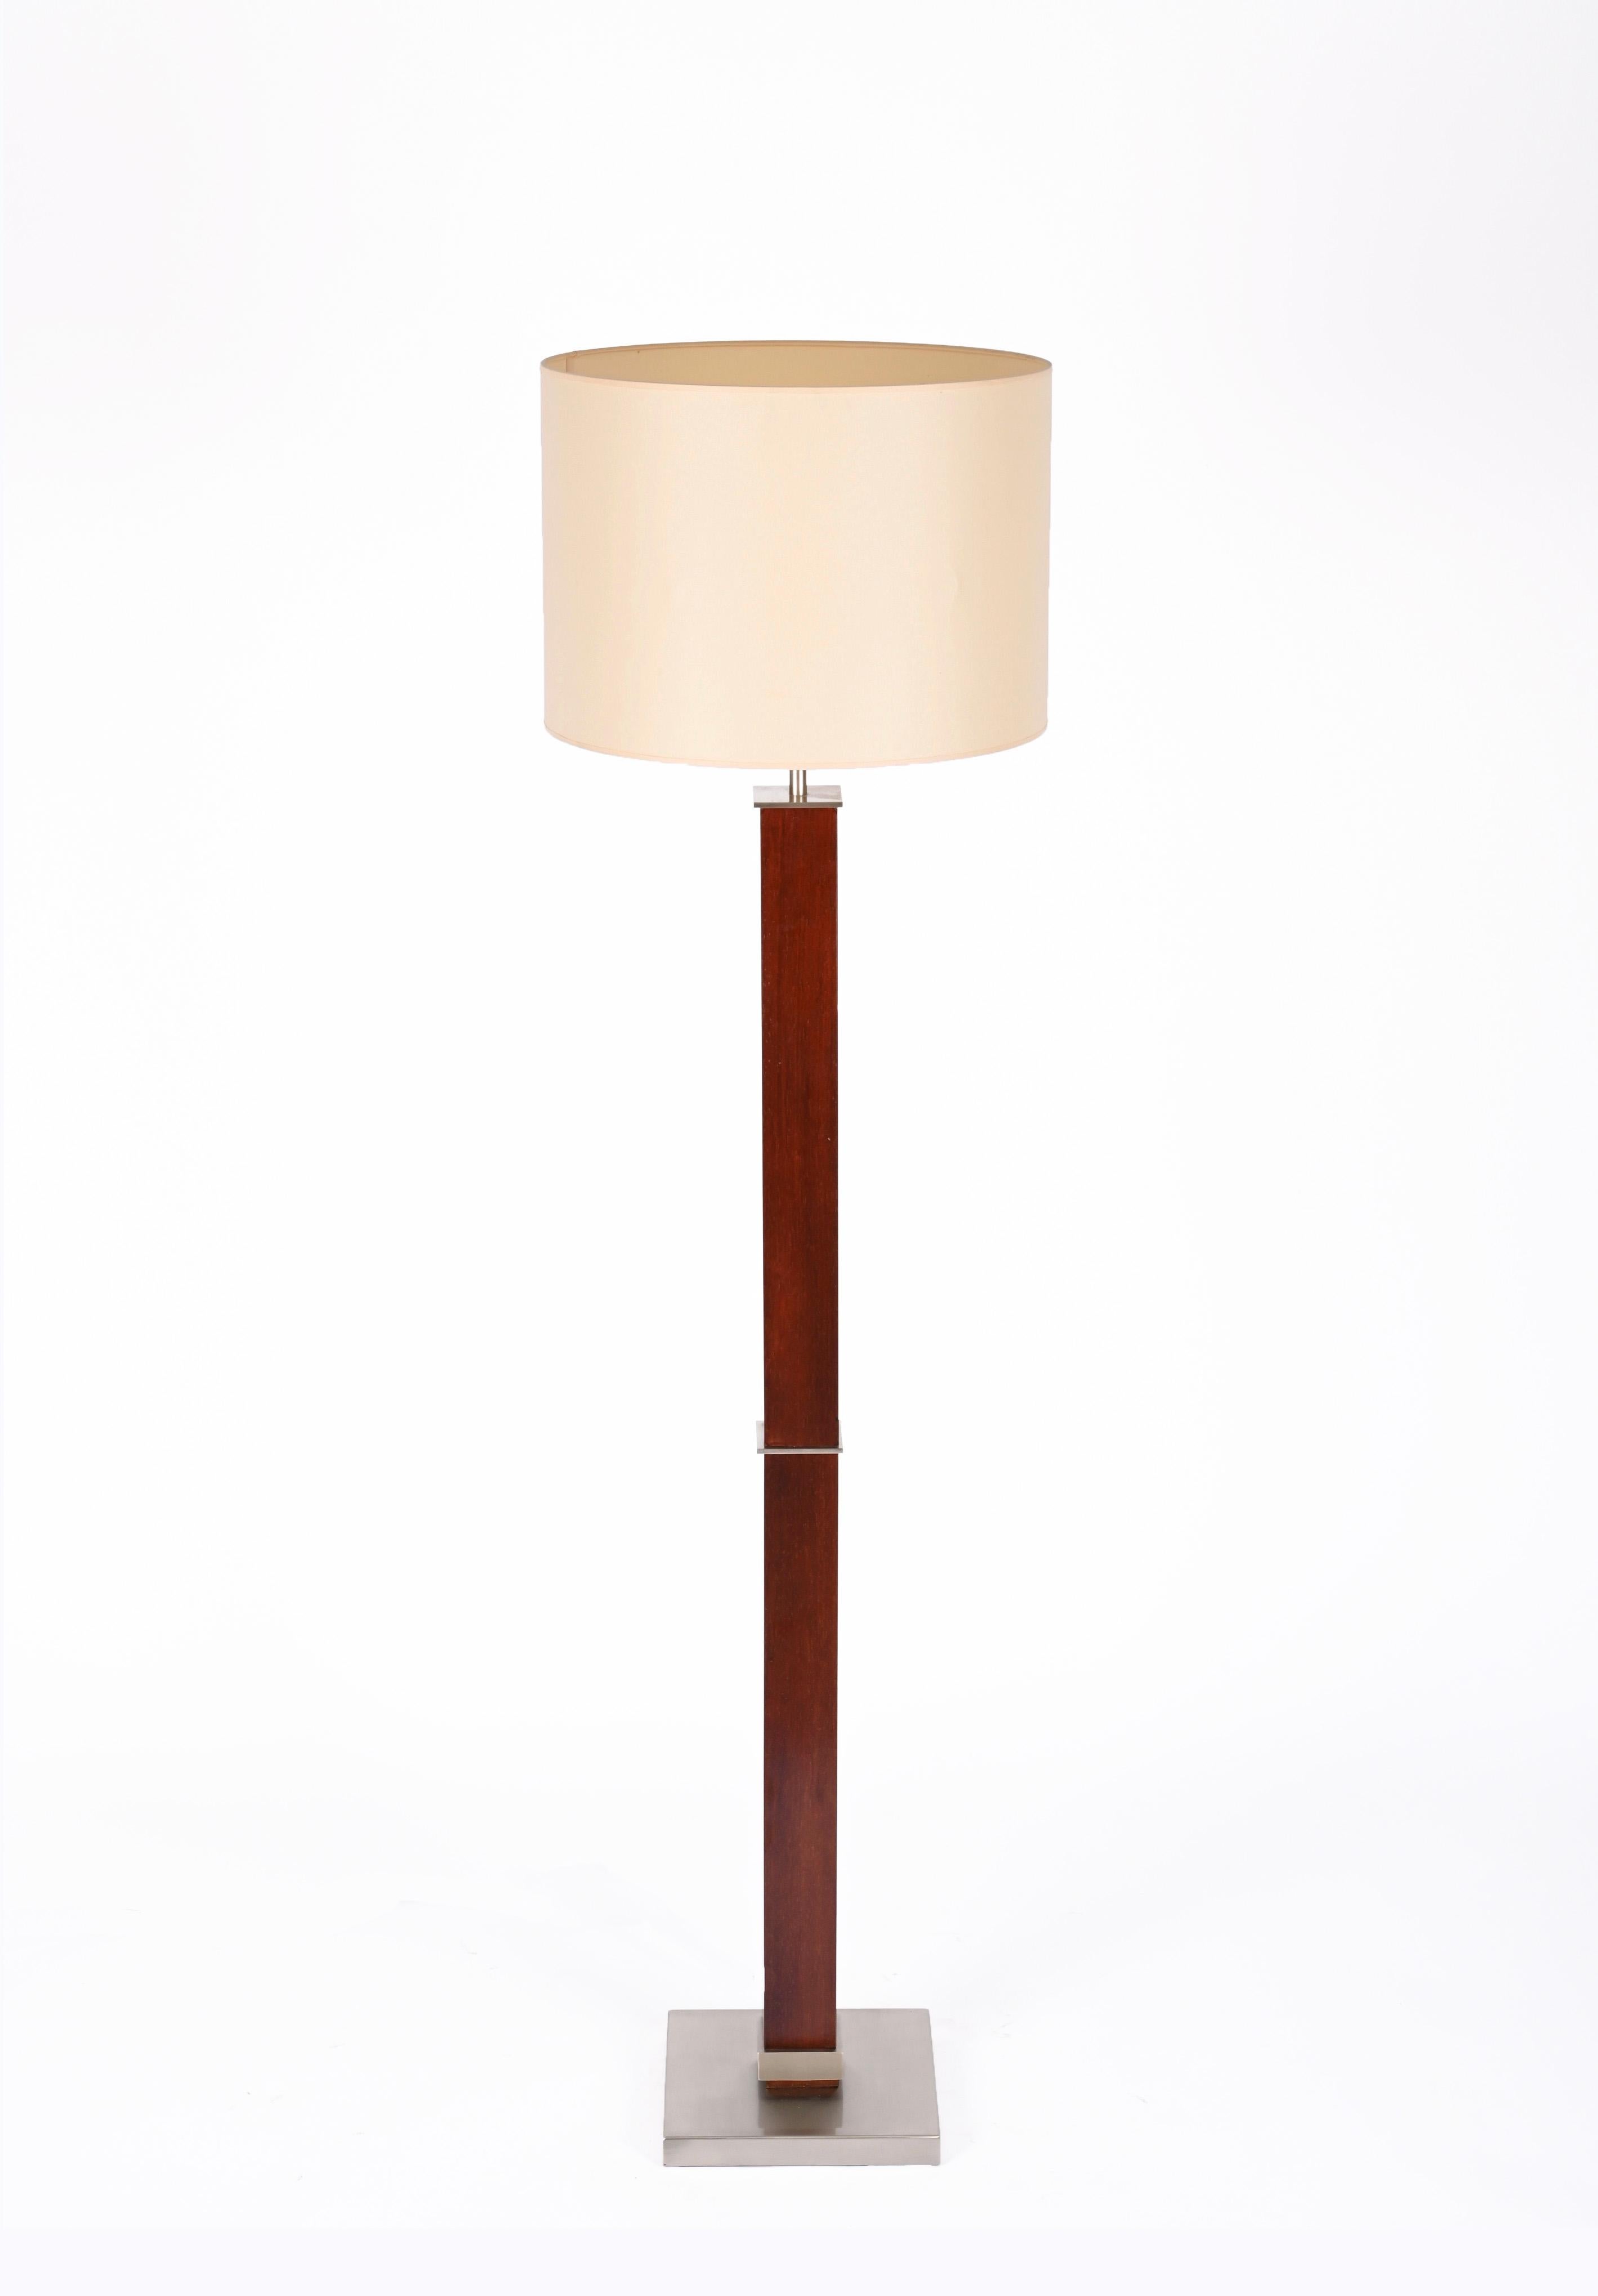 Zonca Voghera Minimal Midcentury Italian Wood and Steel Floor Lamp, 1980s For Sale 6